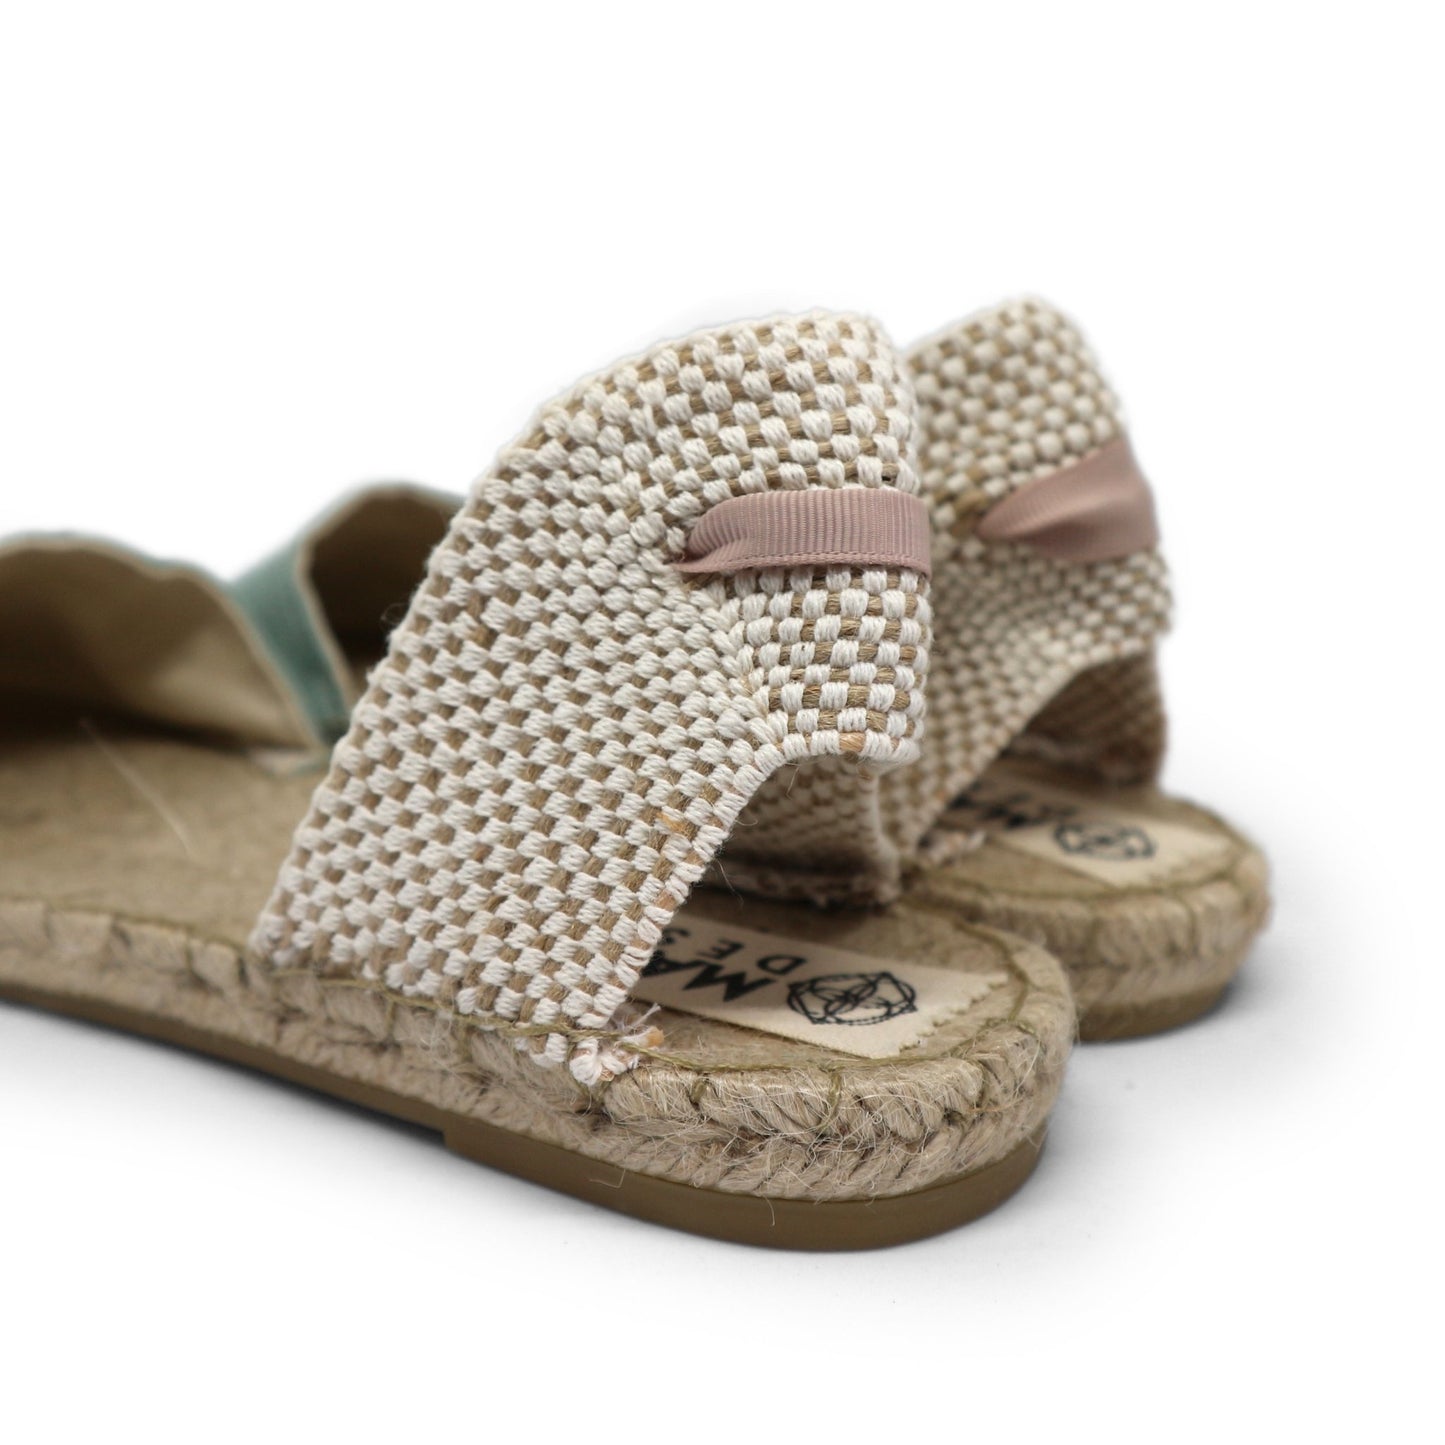 Vegan Espadrilles Sandals - Beige Herringbone - Maslinda Designs